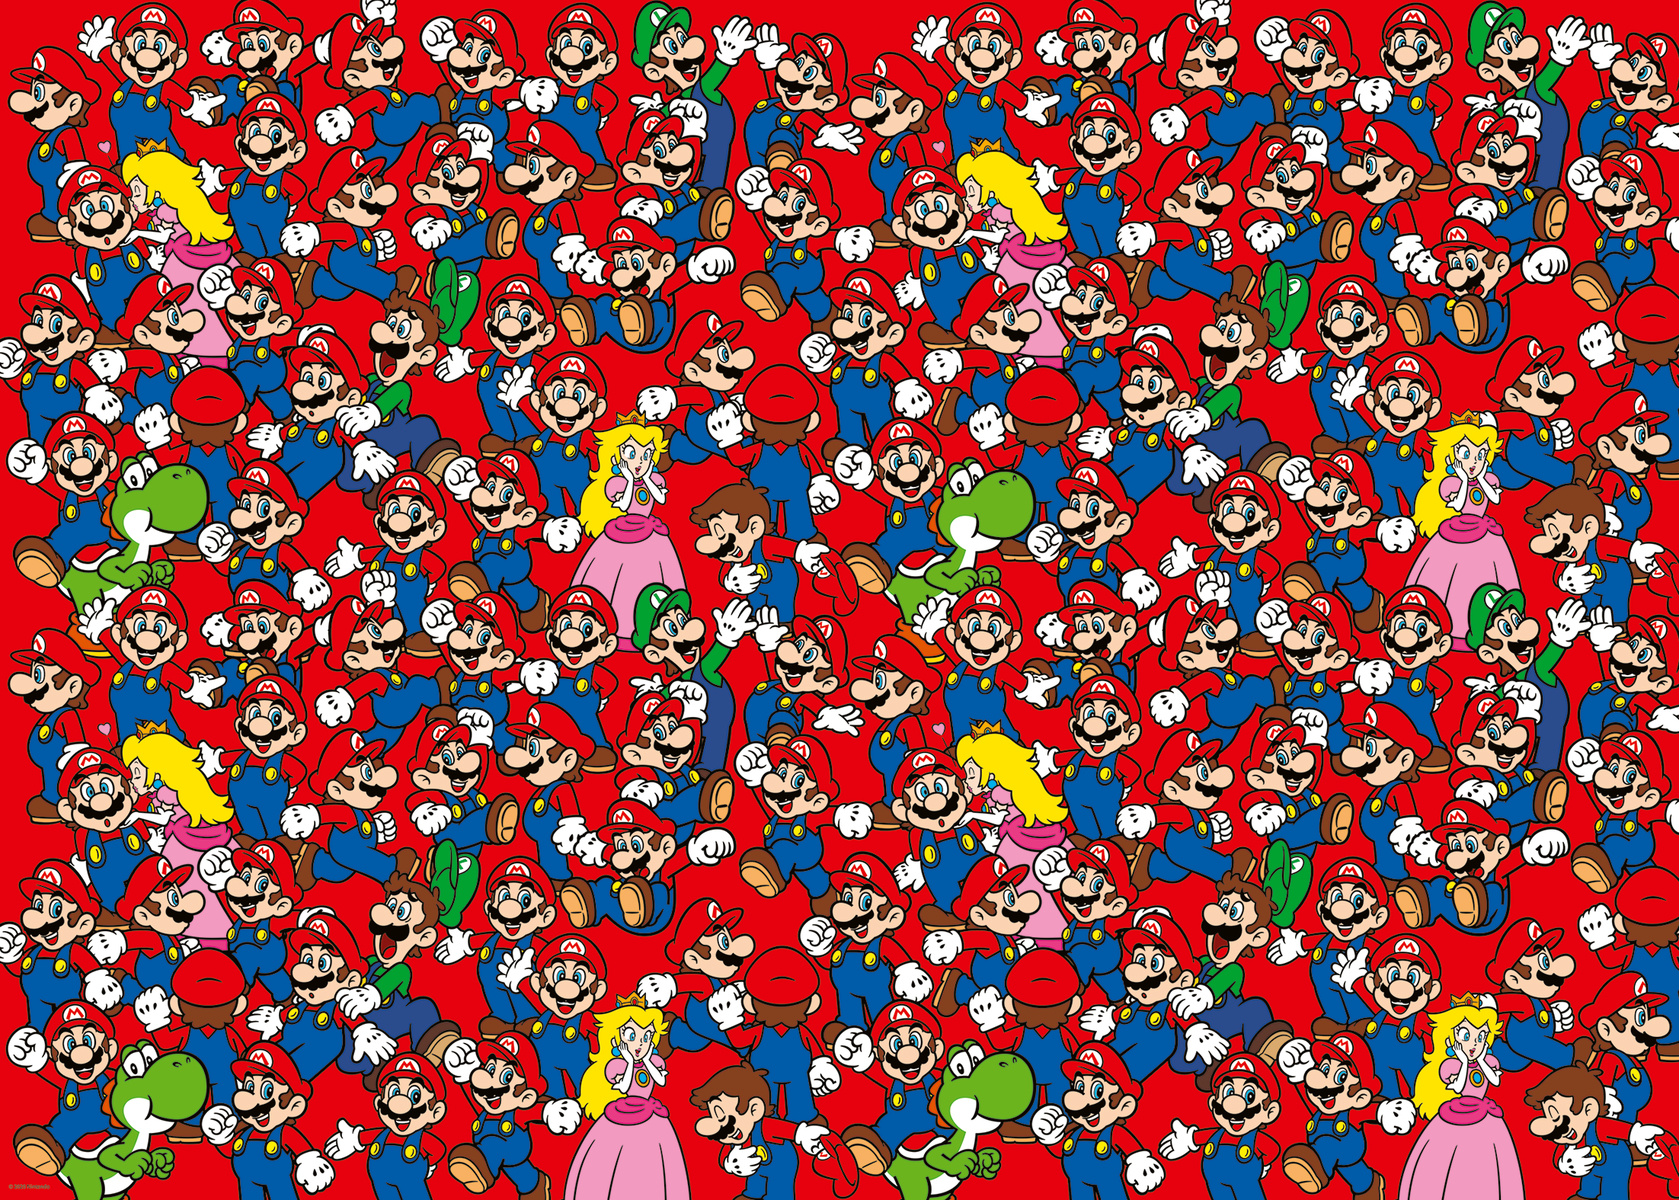 Super Mario World - ePuzzle photo puzzle